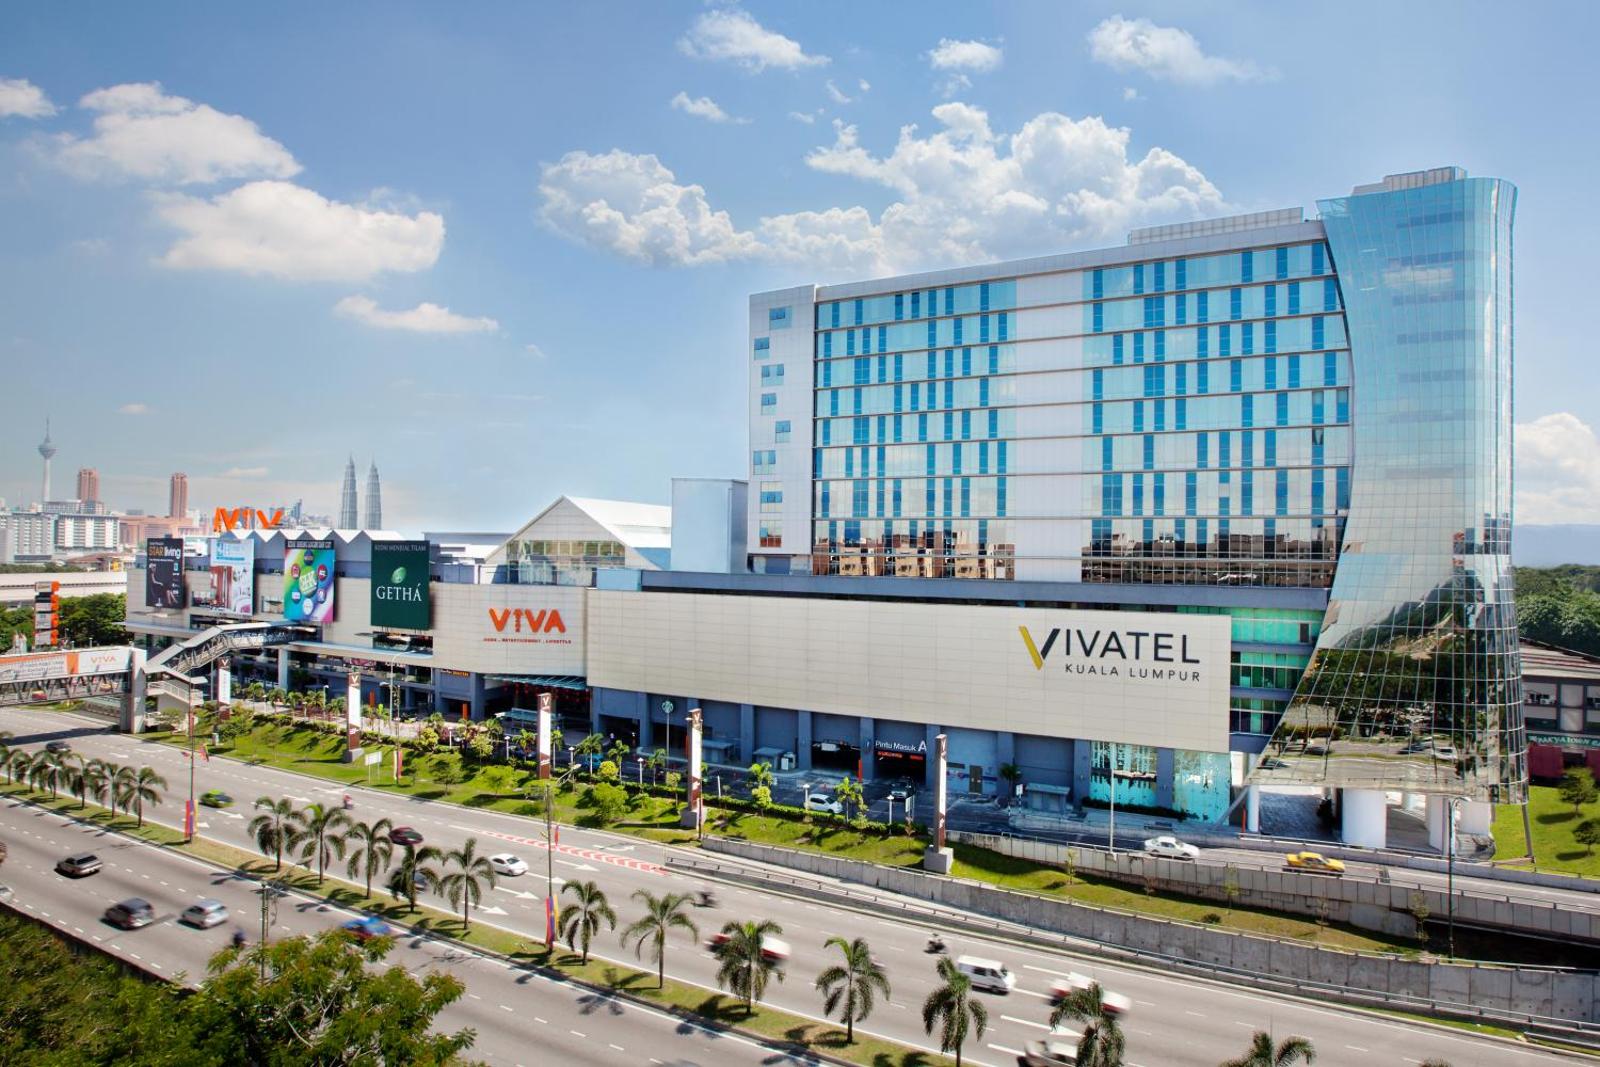 Vivatel Kuala Lumpur